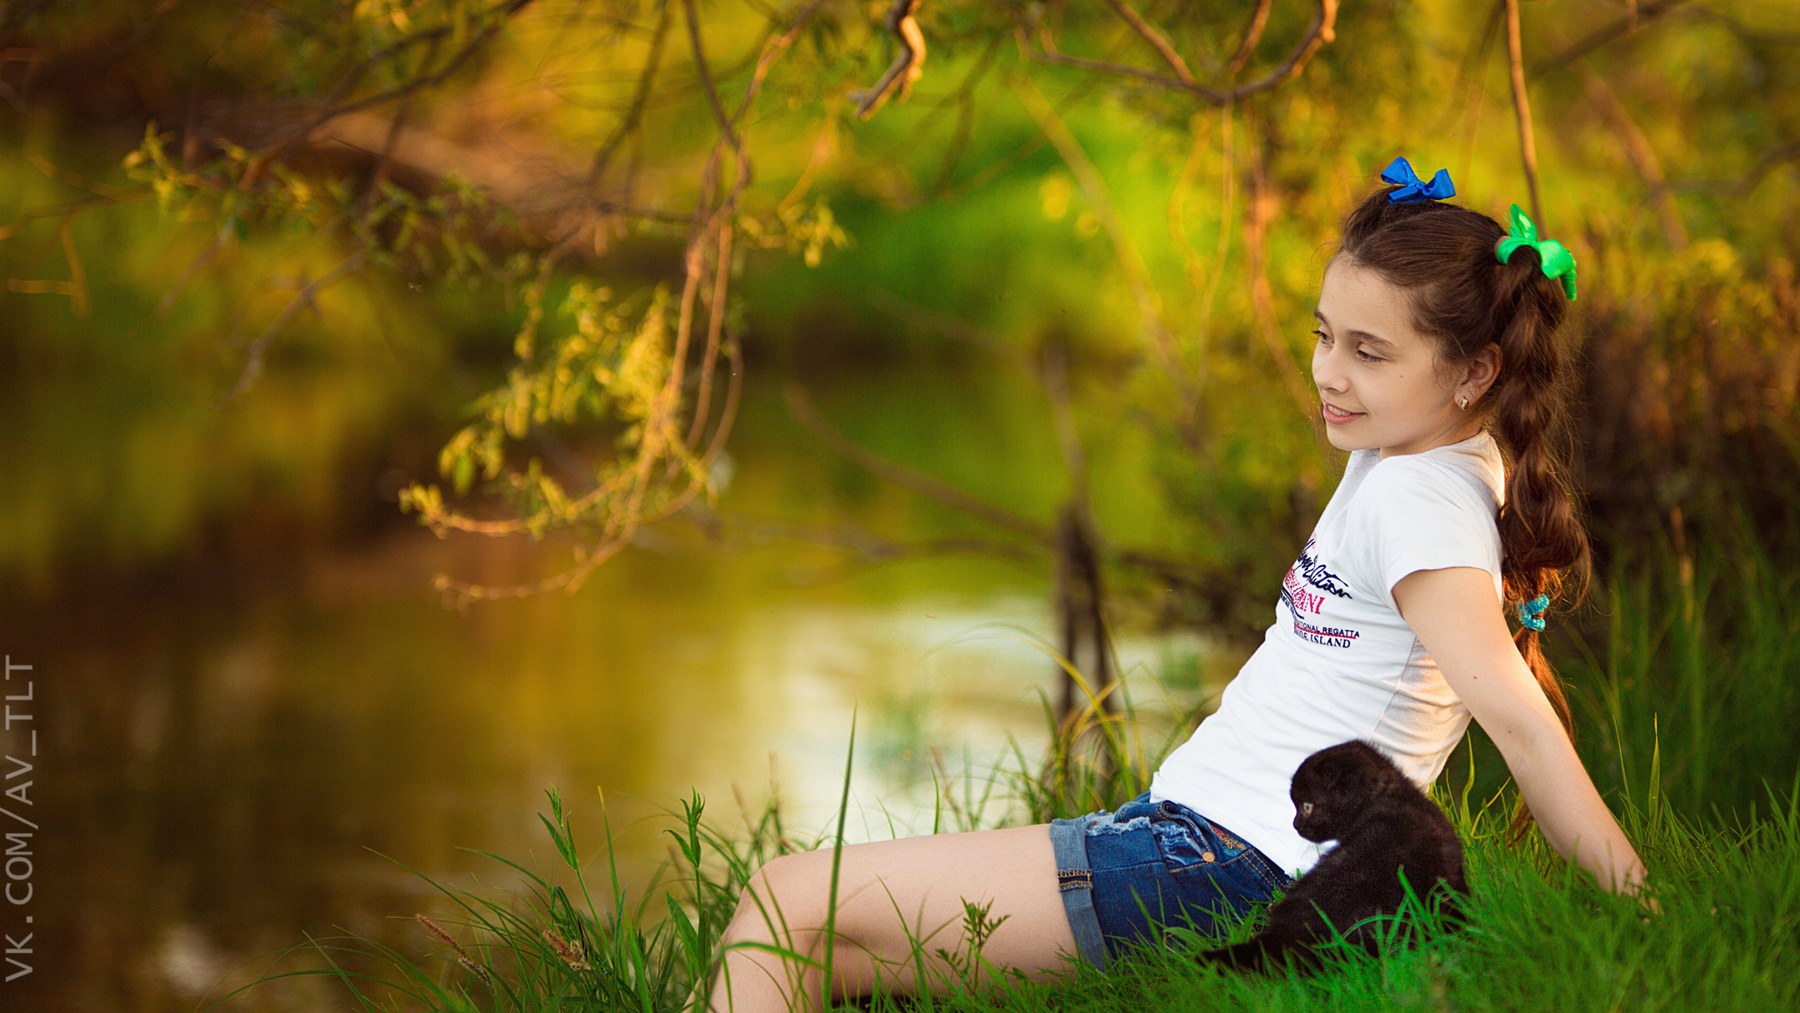 Клякса девочка детское фото в траве котенок речка на закате